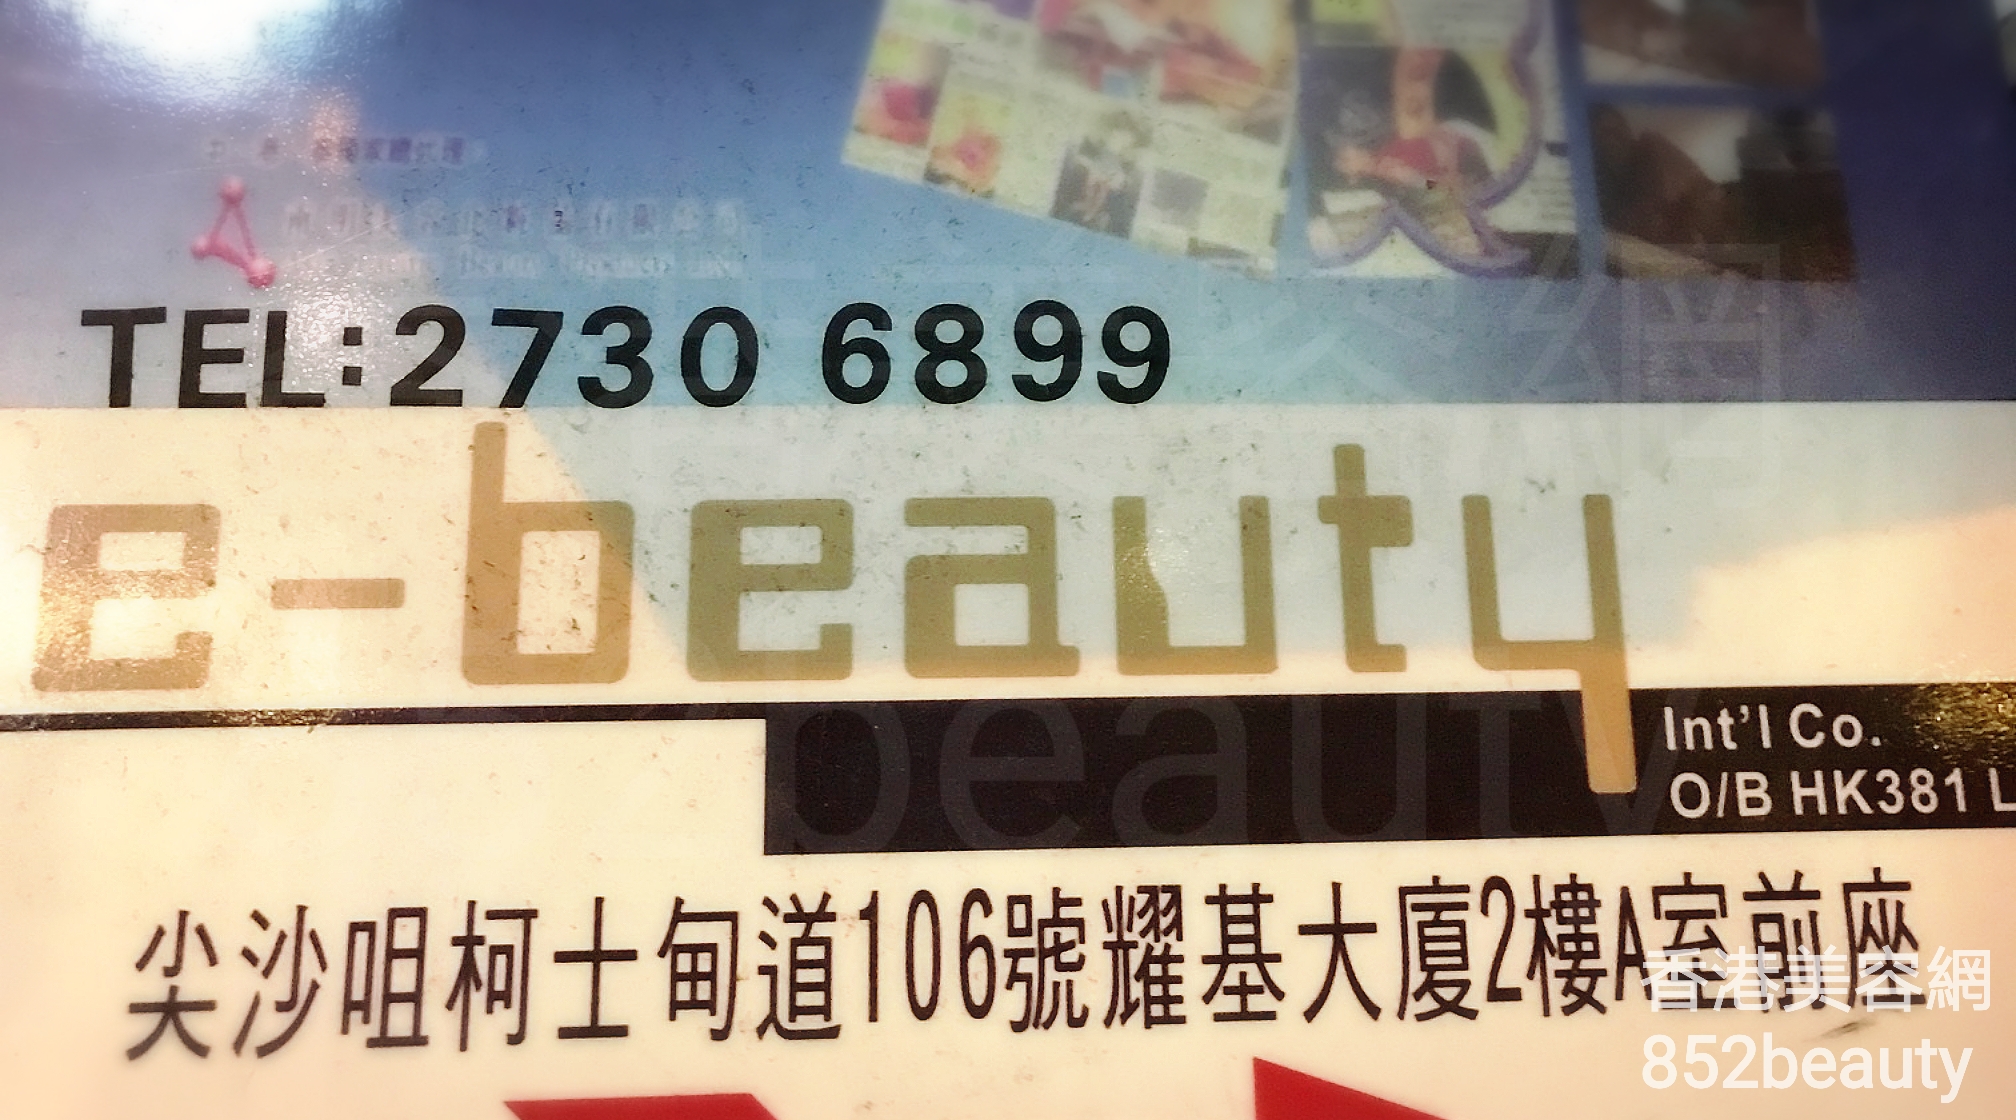 美容院: e-beauty